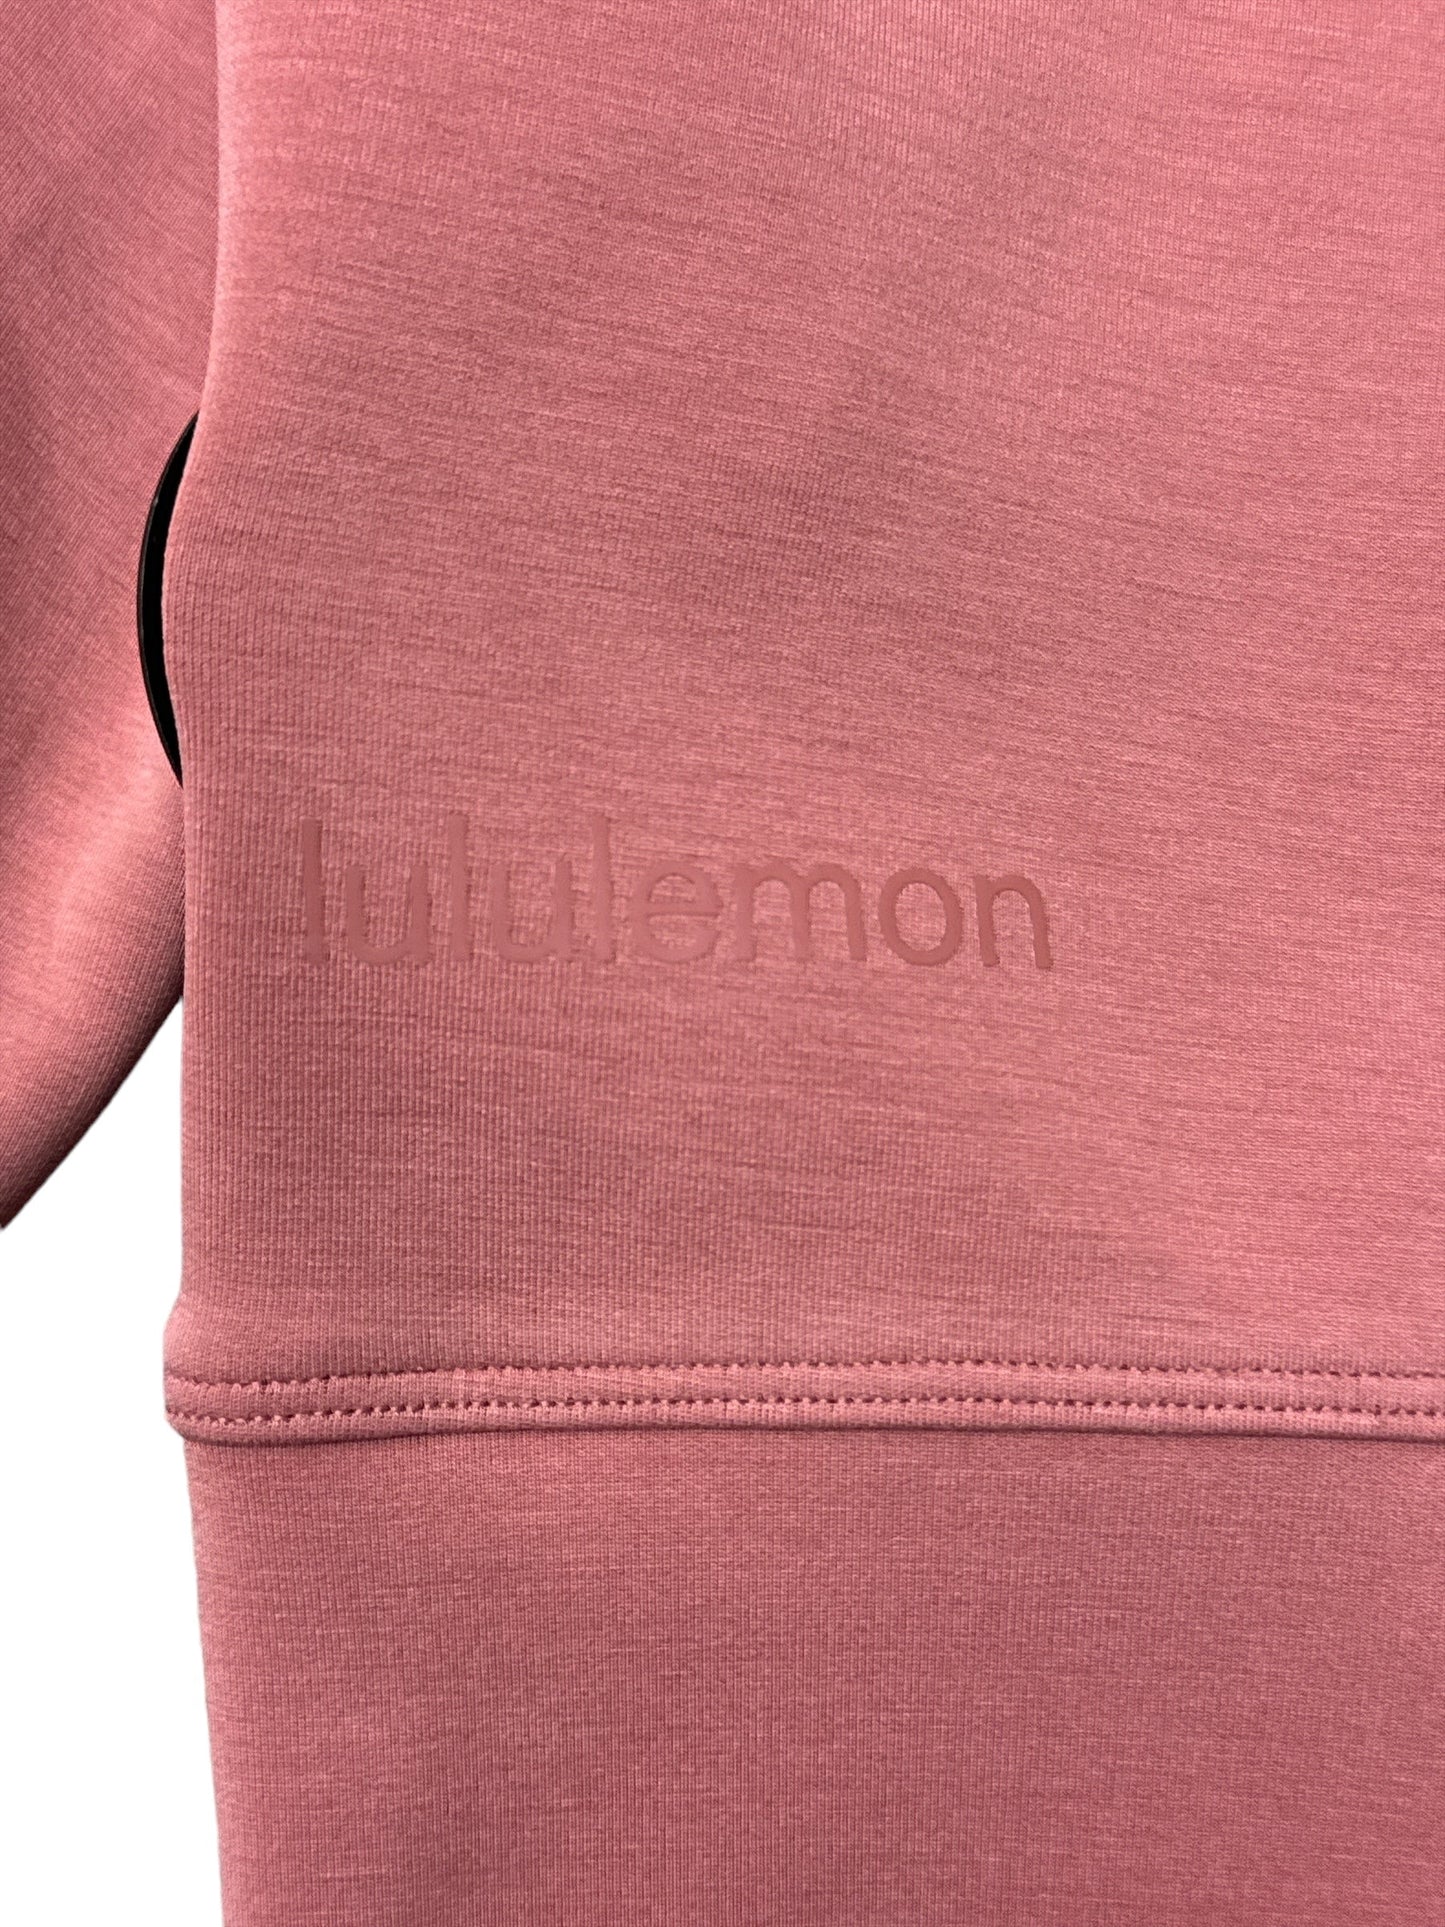 Pink Athletic Sweatshirt Collar Lululemon, Size 8